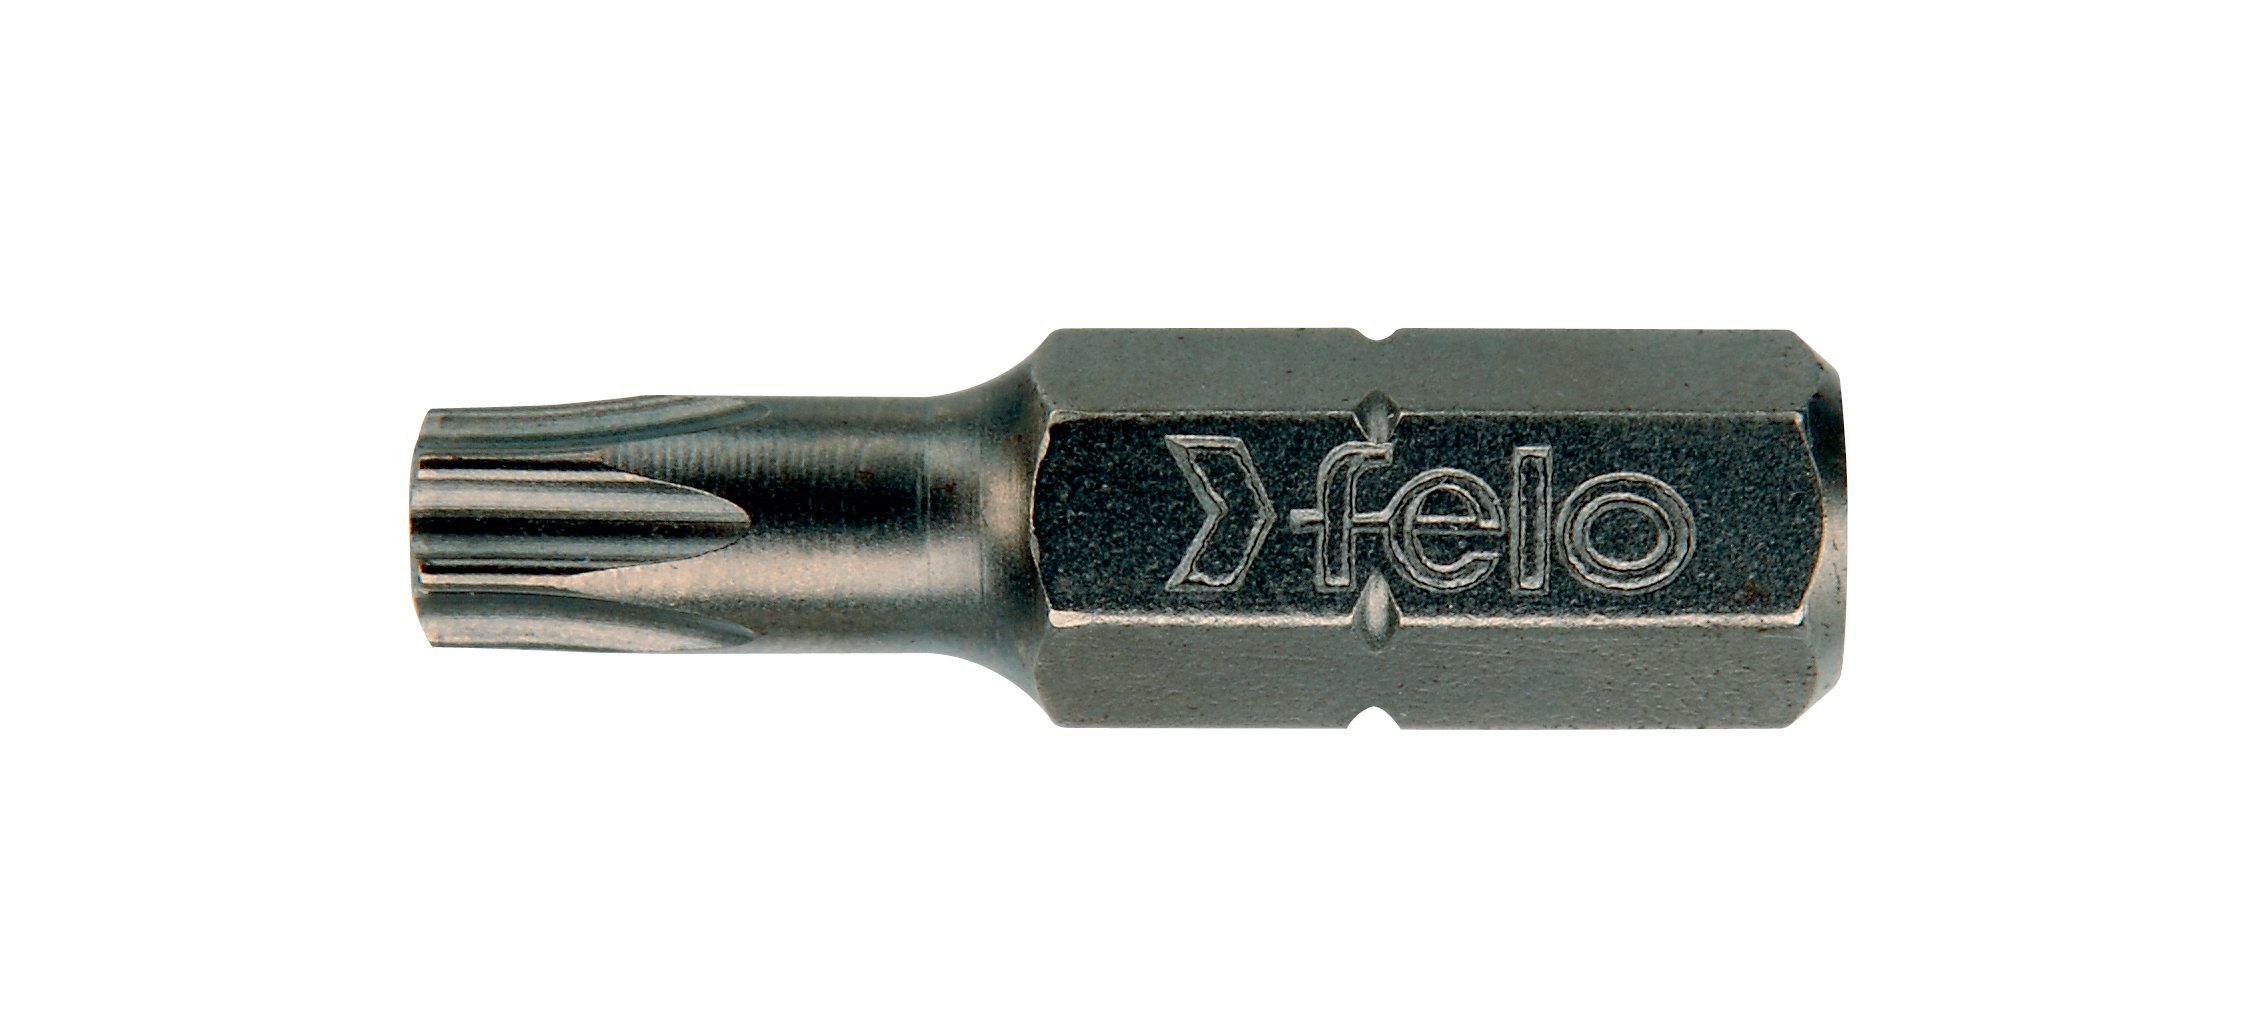 6,3 (10 Industrie x Tx Felo Torx-Bit Stück) C Felo Bit, 6 25mm